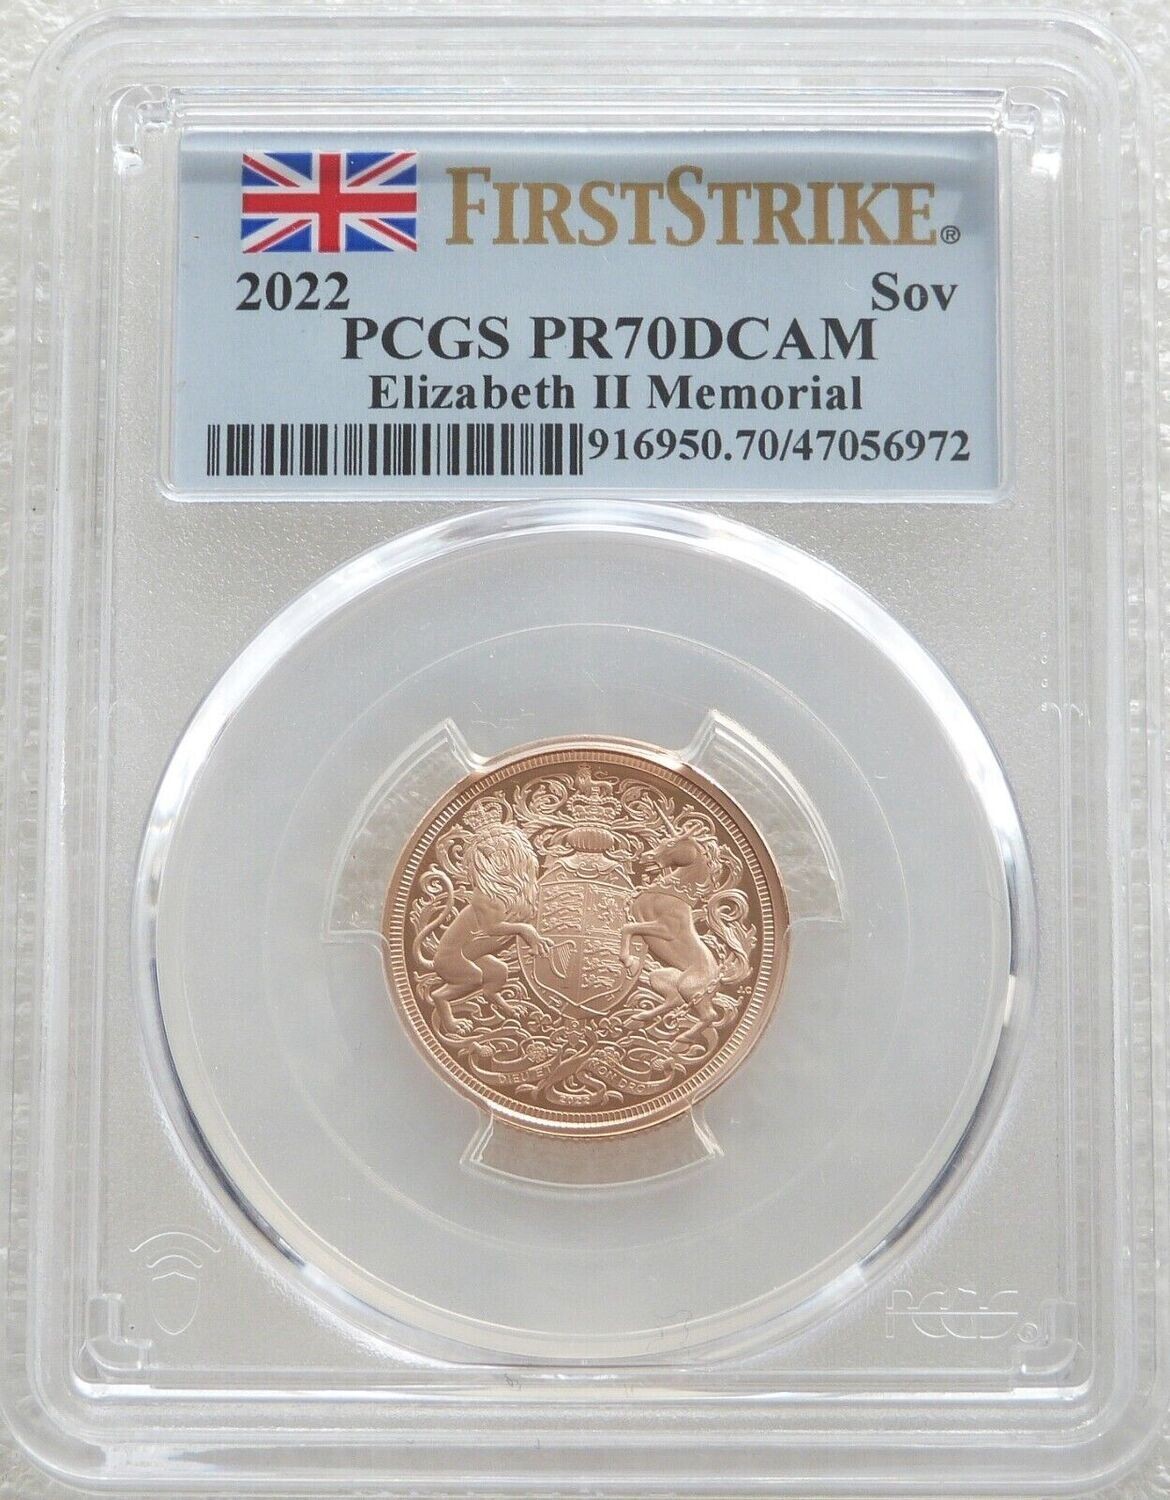 2022 Memorial Full Sovereign Gold Proof Coin PCGS PR70 DCAM First Strike